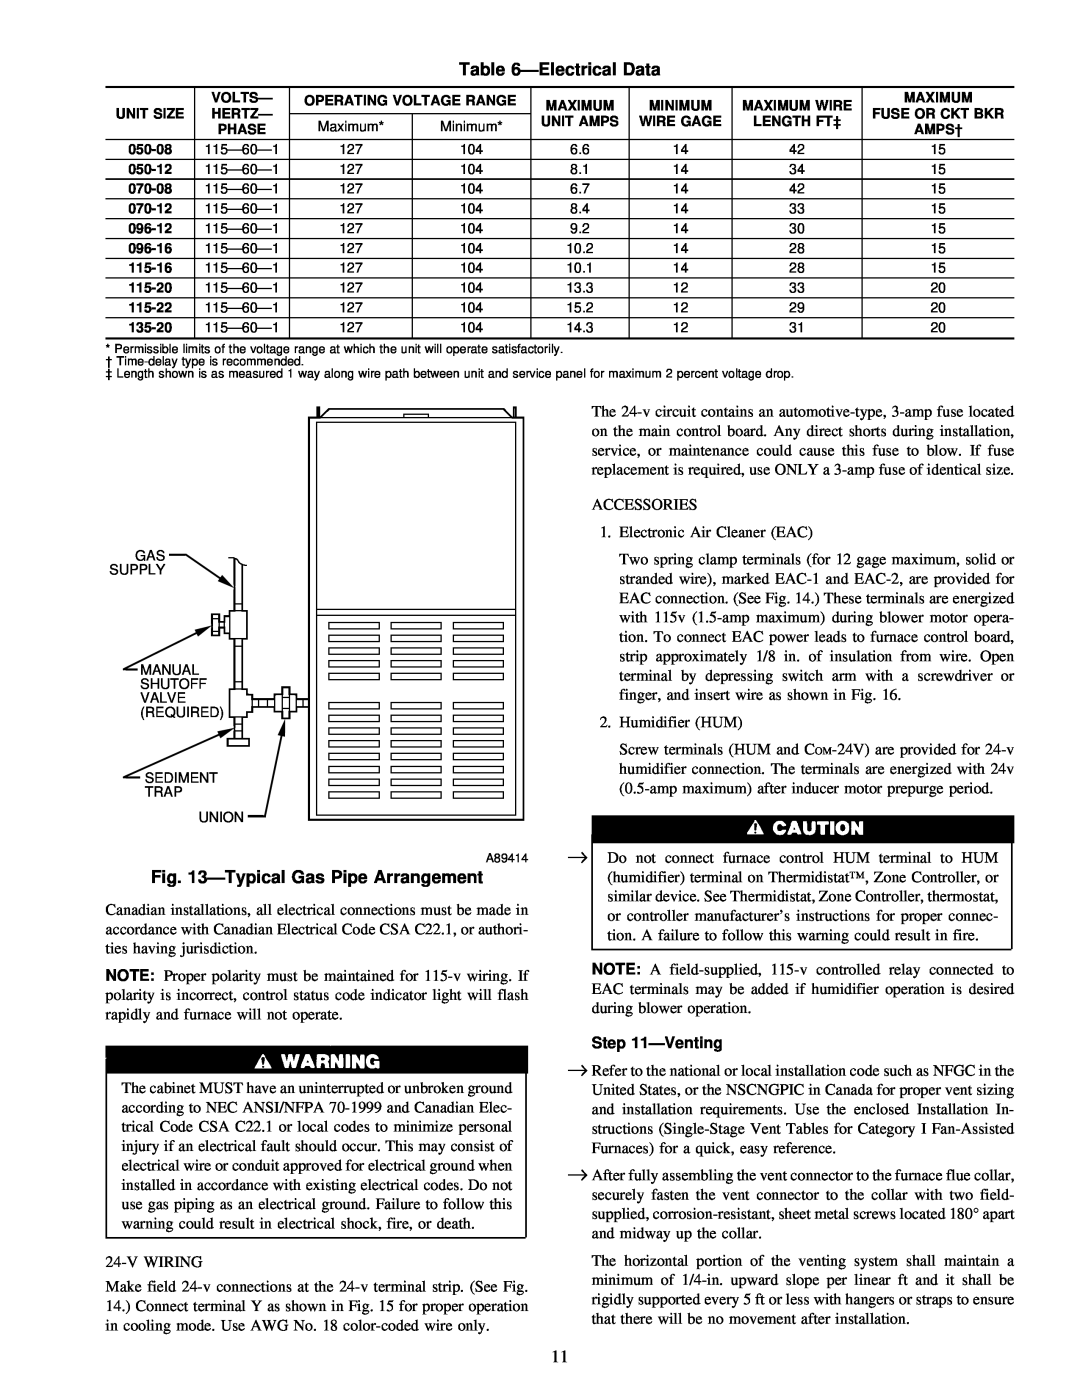 Carrier 58ZAV operating instructions ÐElectrical Data, ÐTypical Gas Pipe Arrangement, ÐVenting 